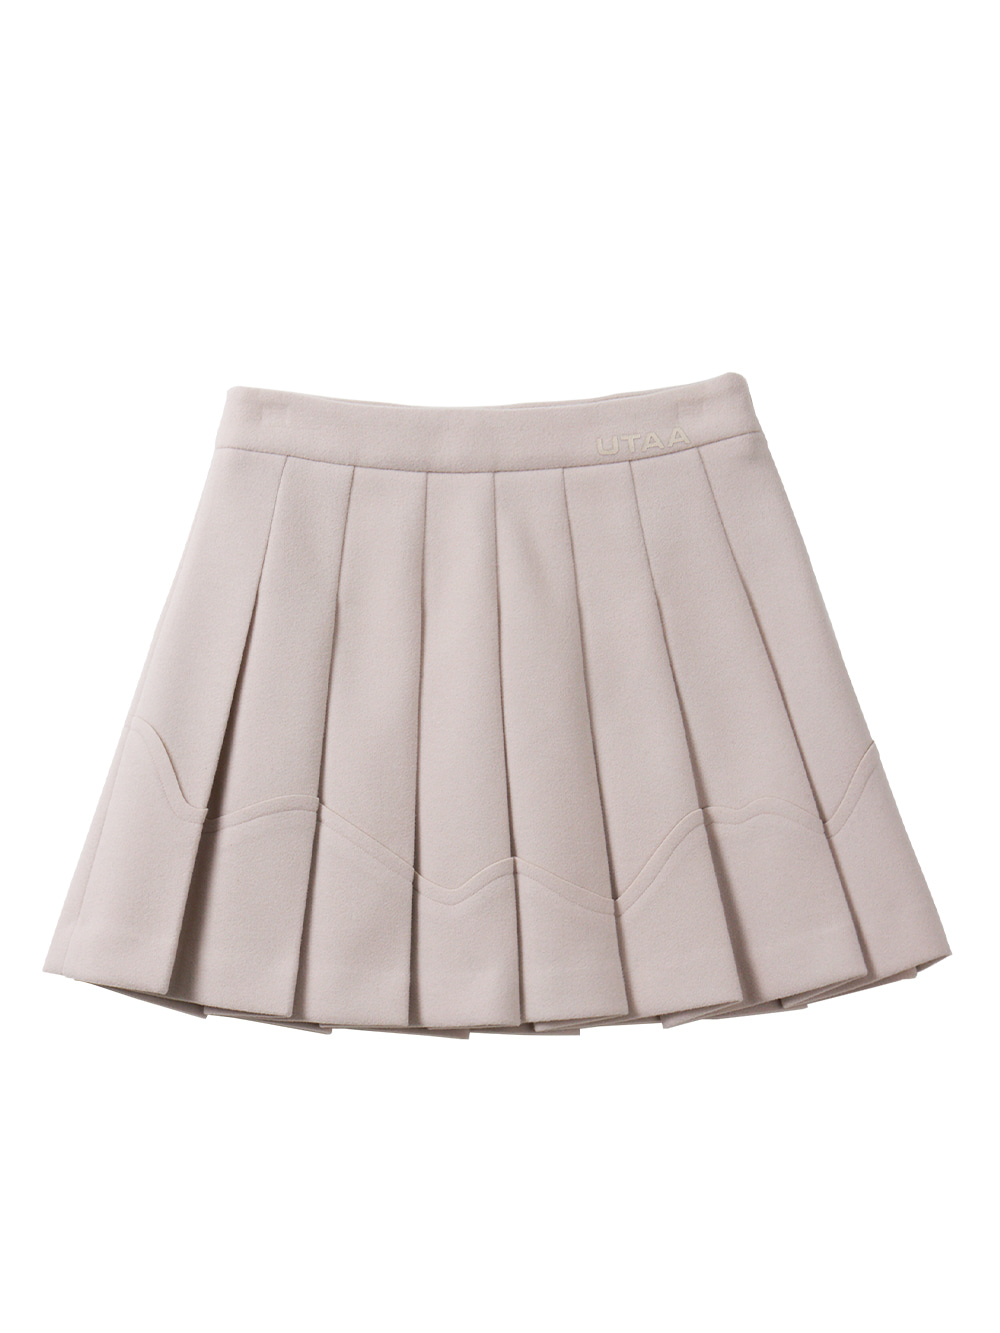 UTAA Canyon Flare Winter Skirt : Beige (UB1SKF190BE)